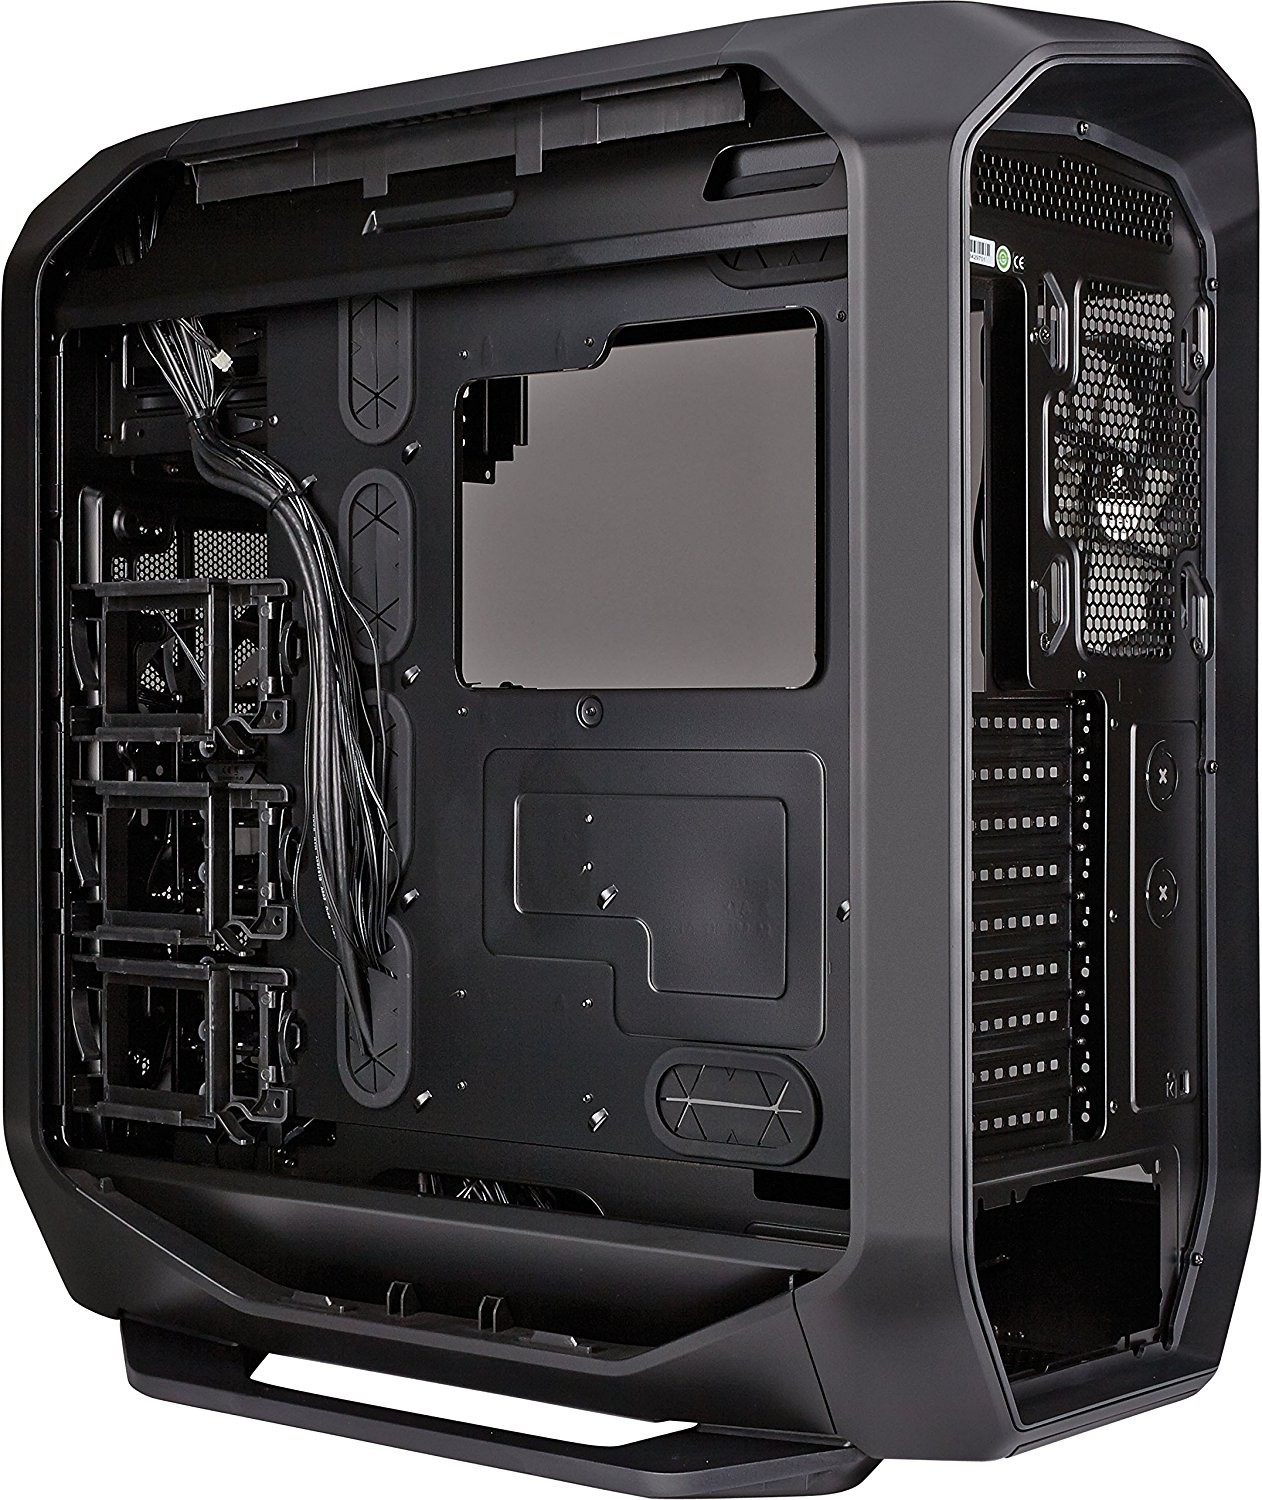 Corsair Graphite Series 780T Full-Tower PC Case (Black)